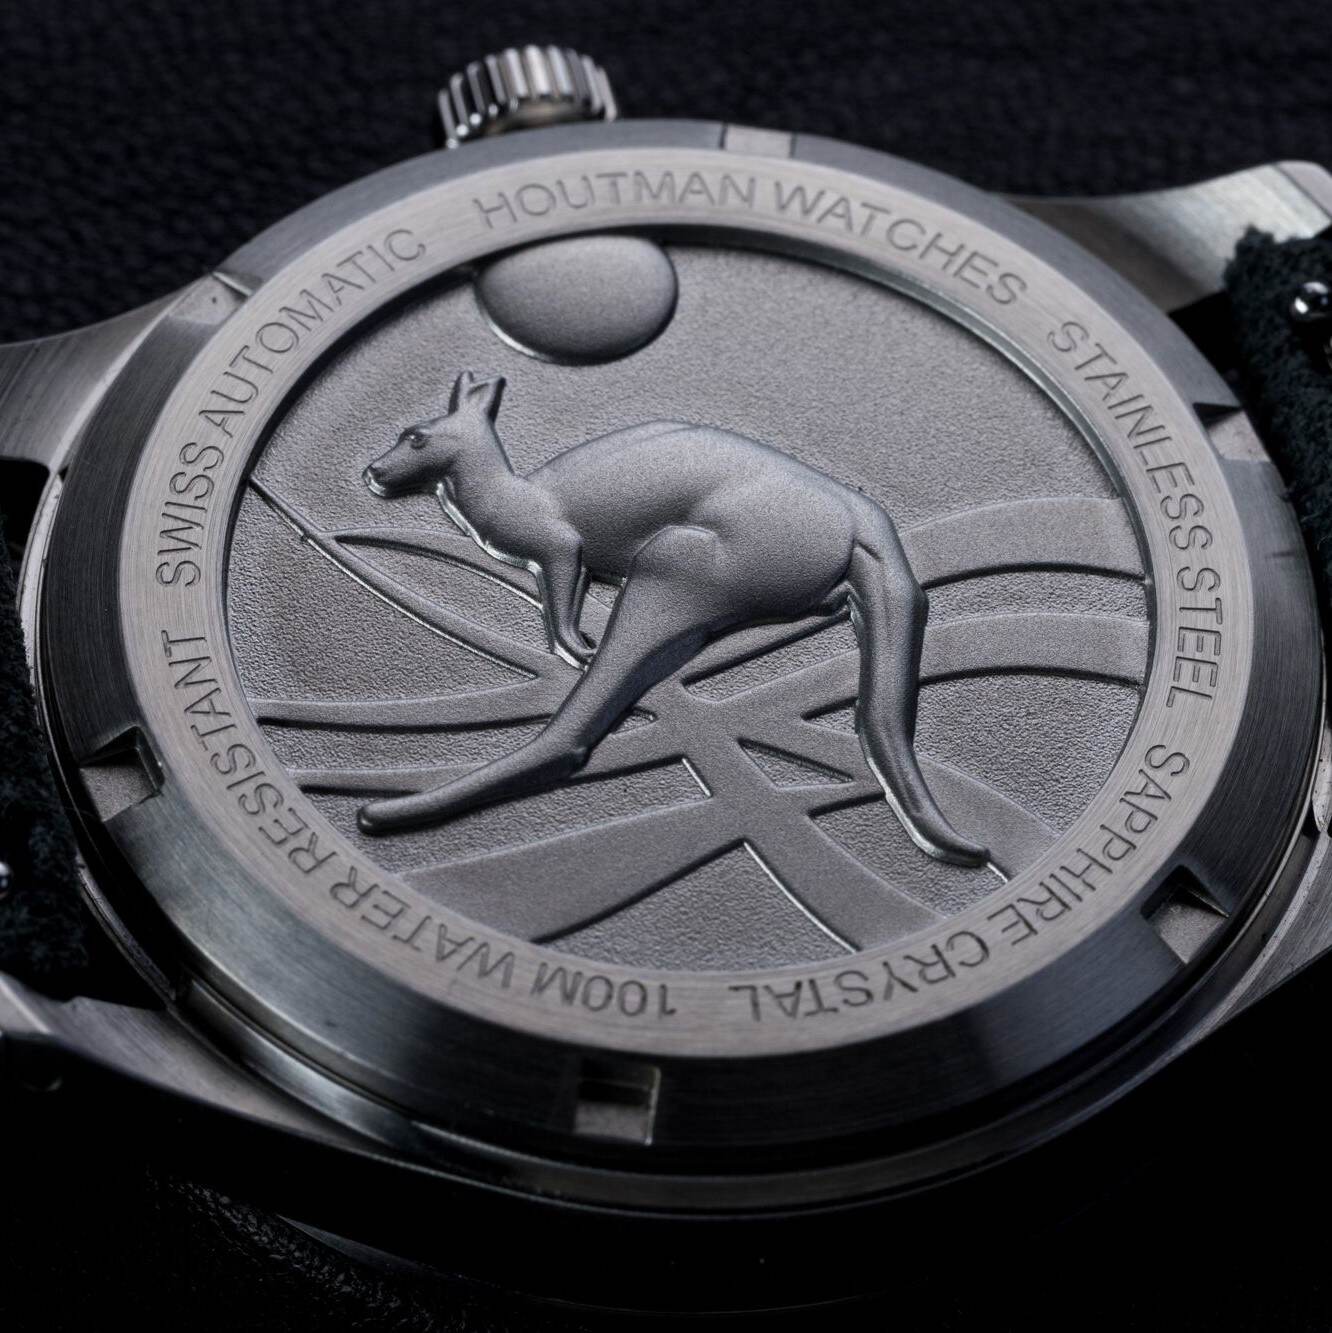 Unique watch case back wirth kangaroo 